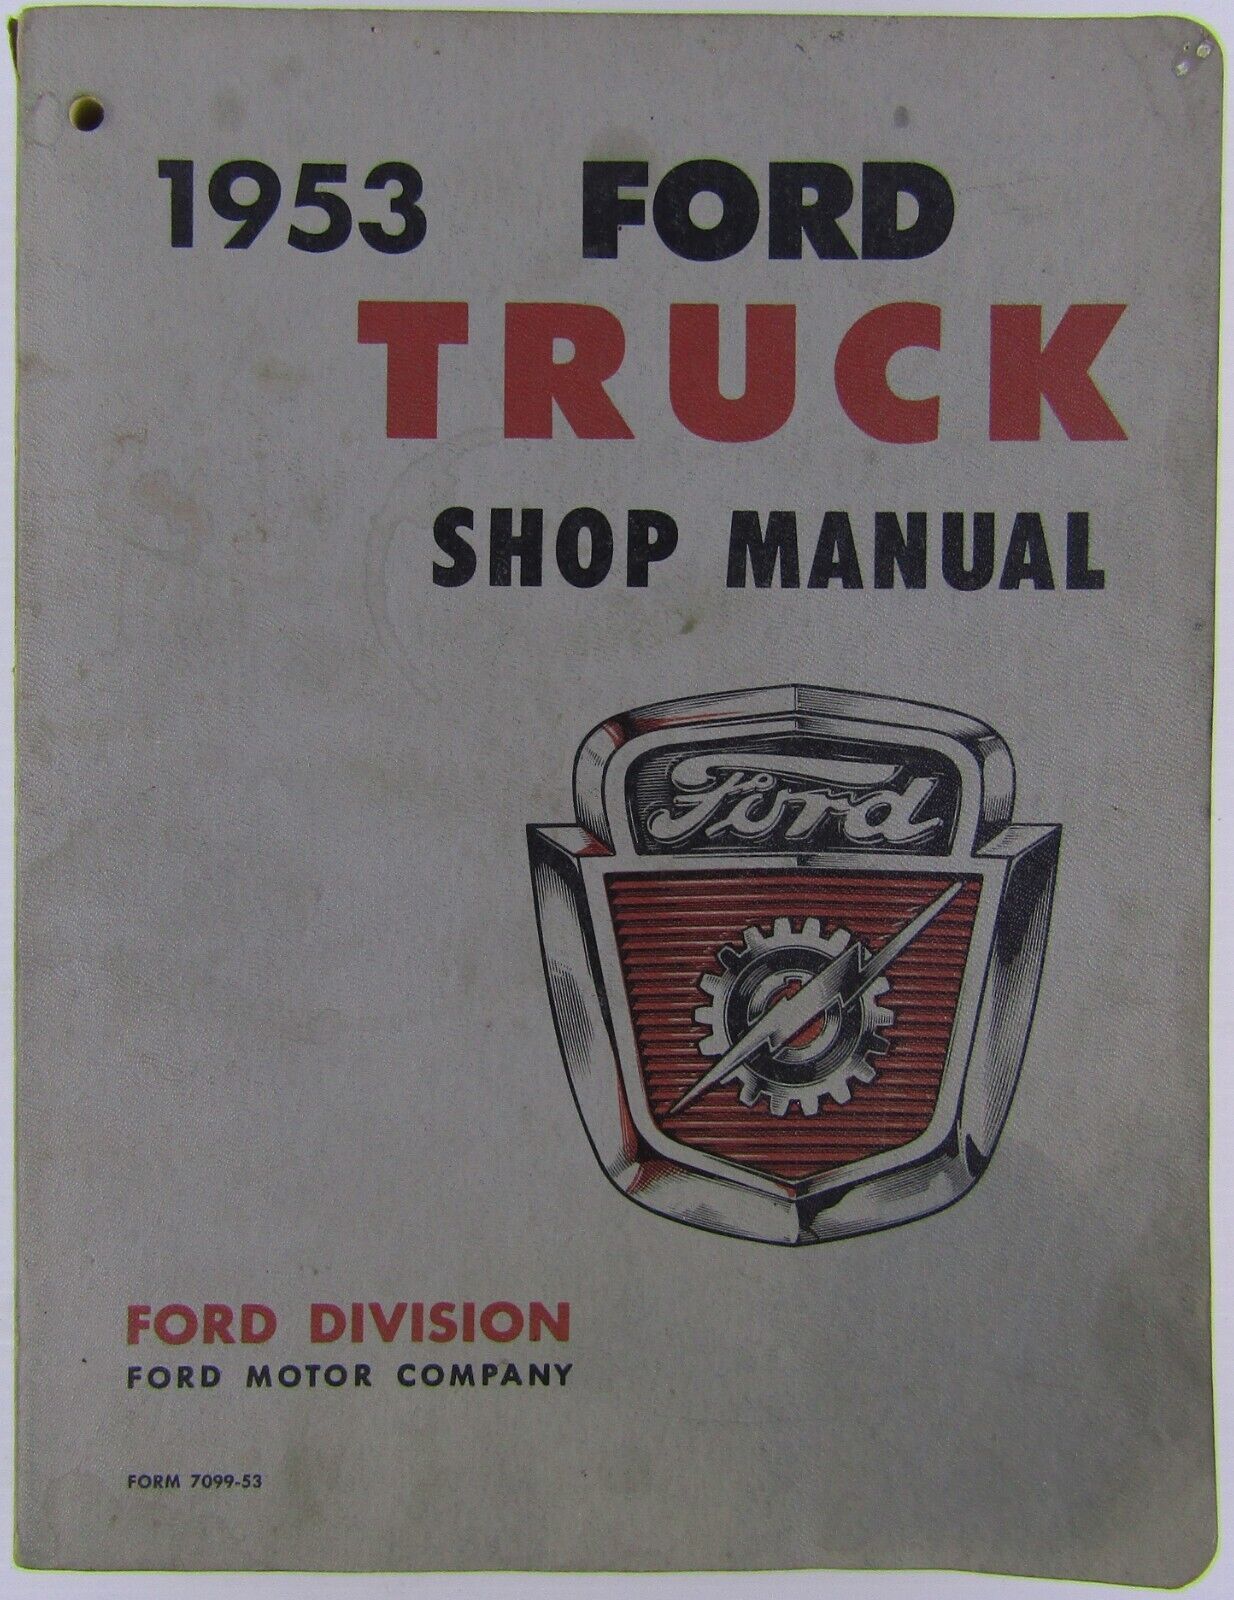 Original 1953 Ford Trucks Shop Manual, Ford Motor Company - $35.51